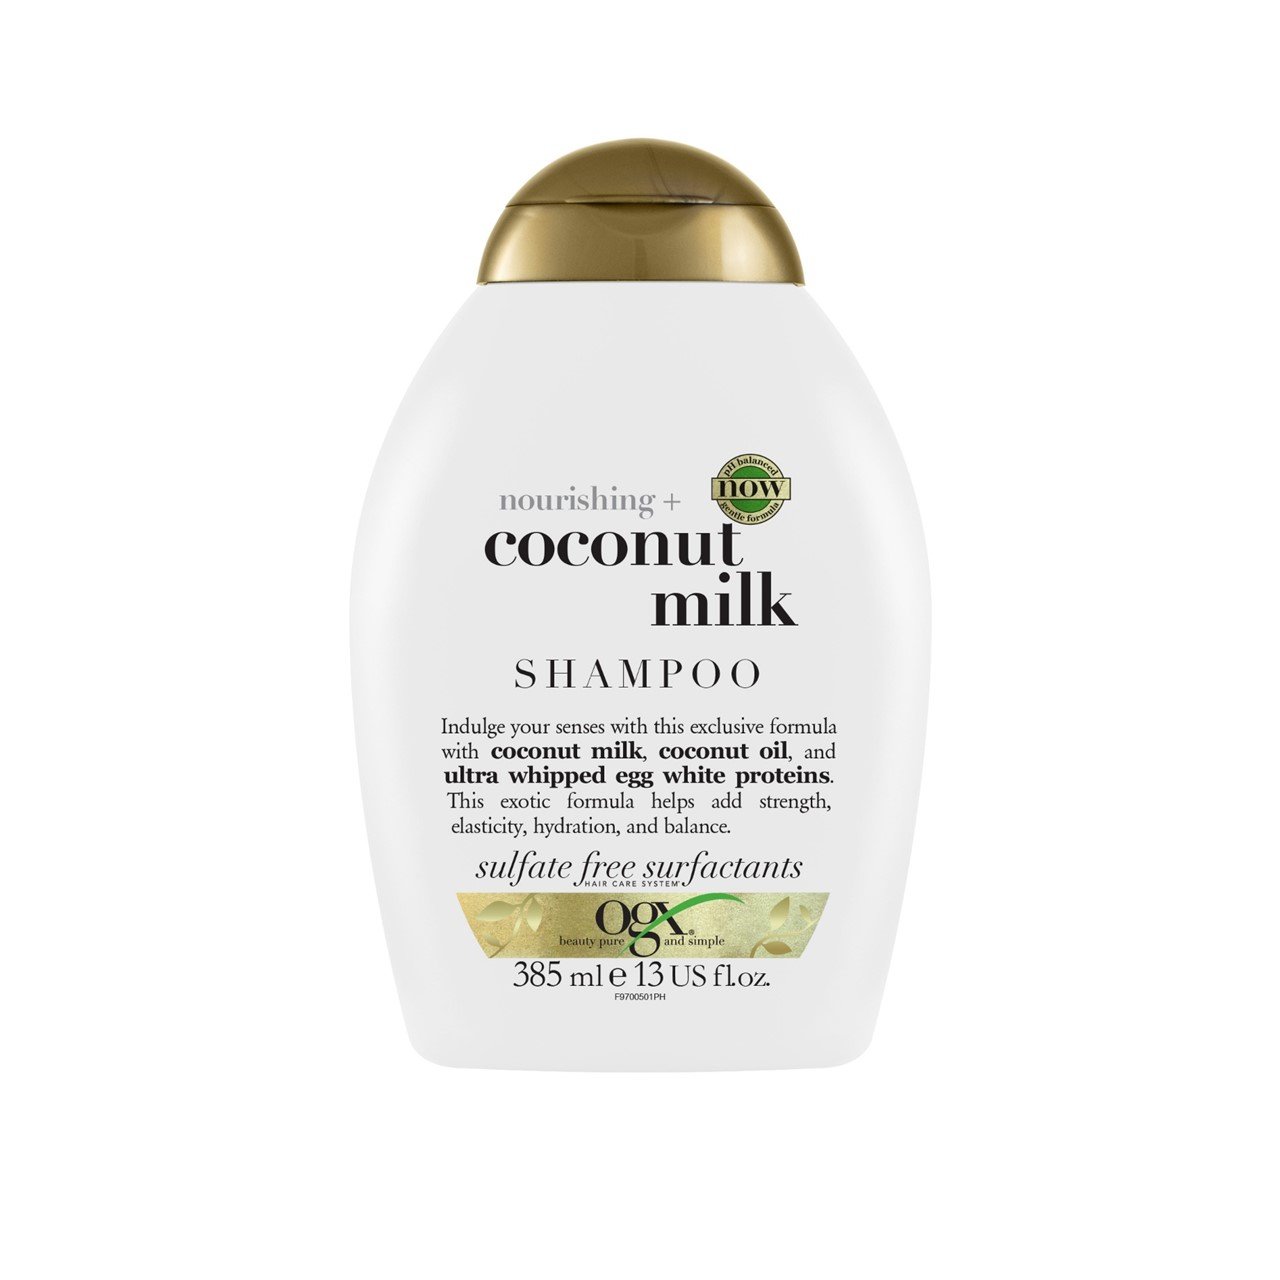 OGX Nourishing + Coconut Milk Shampoo 385ml (13 fl oz)